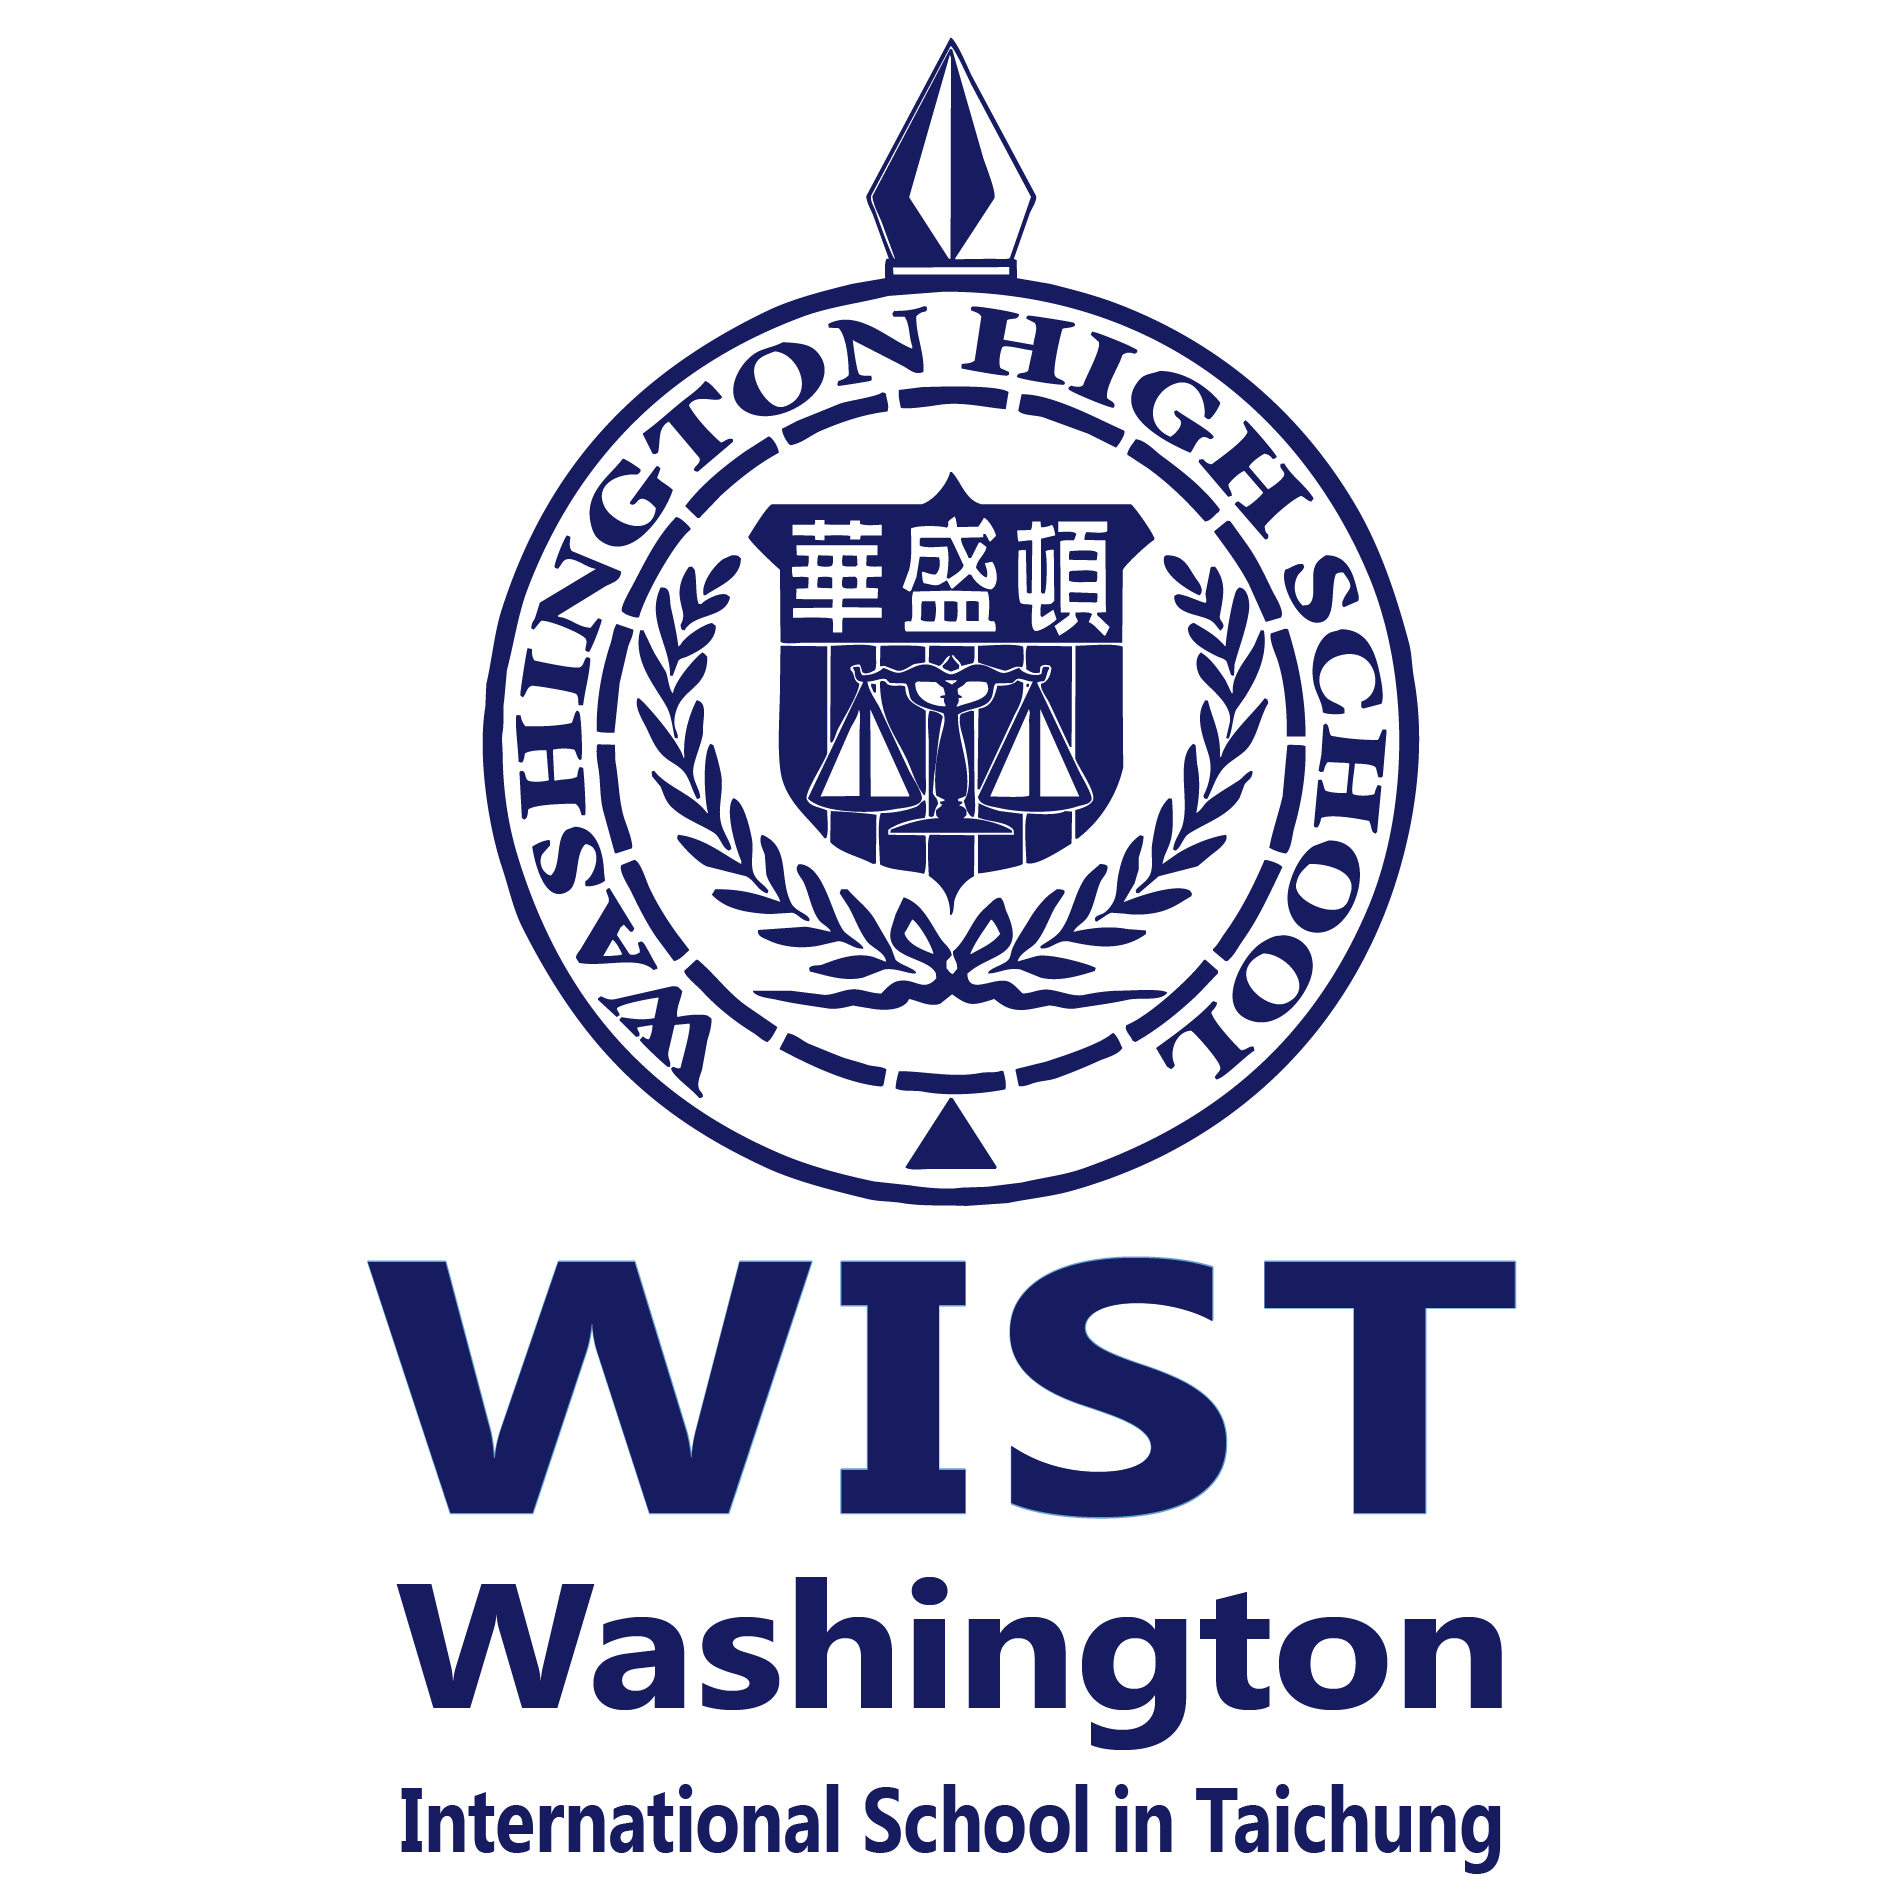 Washington International School in Taichung Recognized